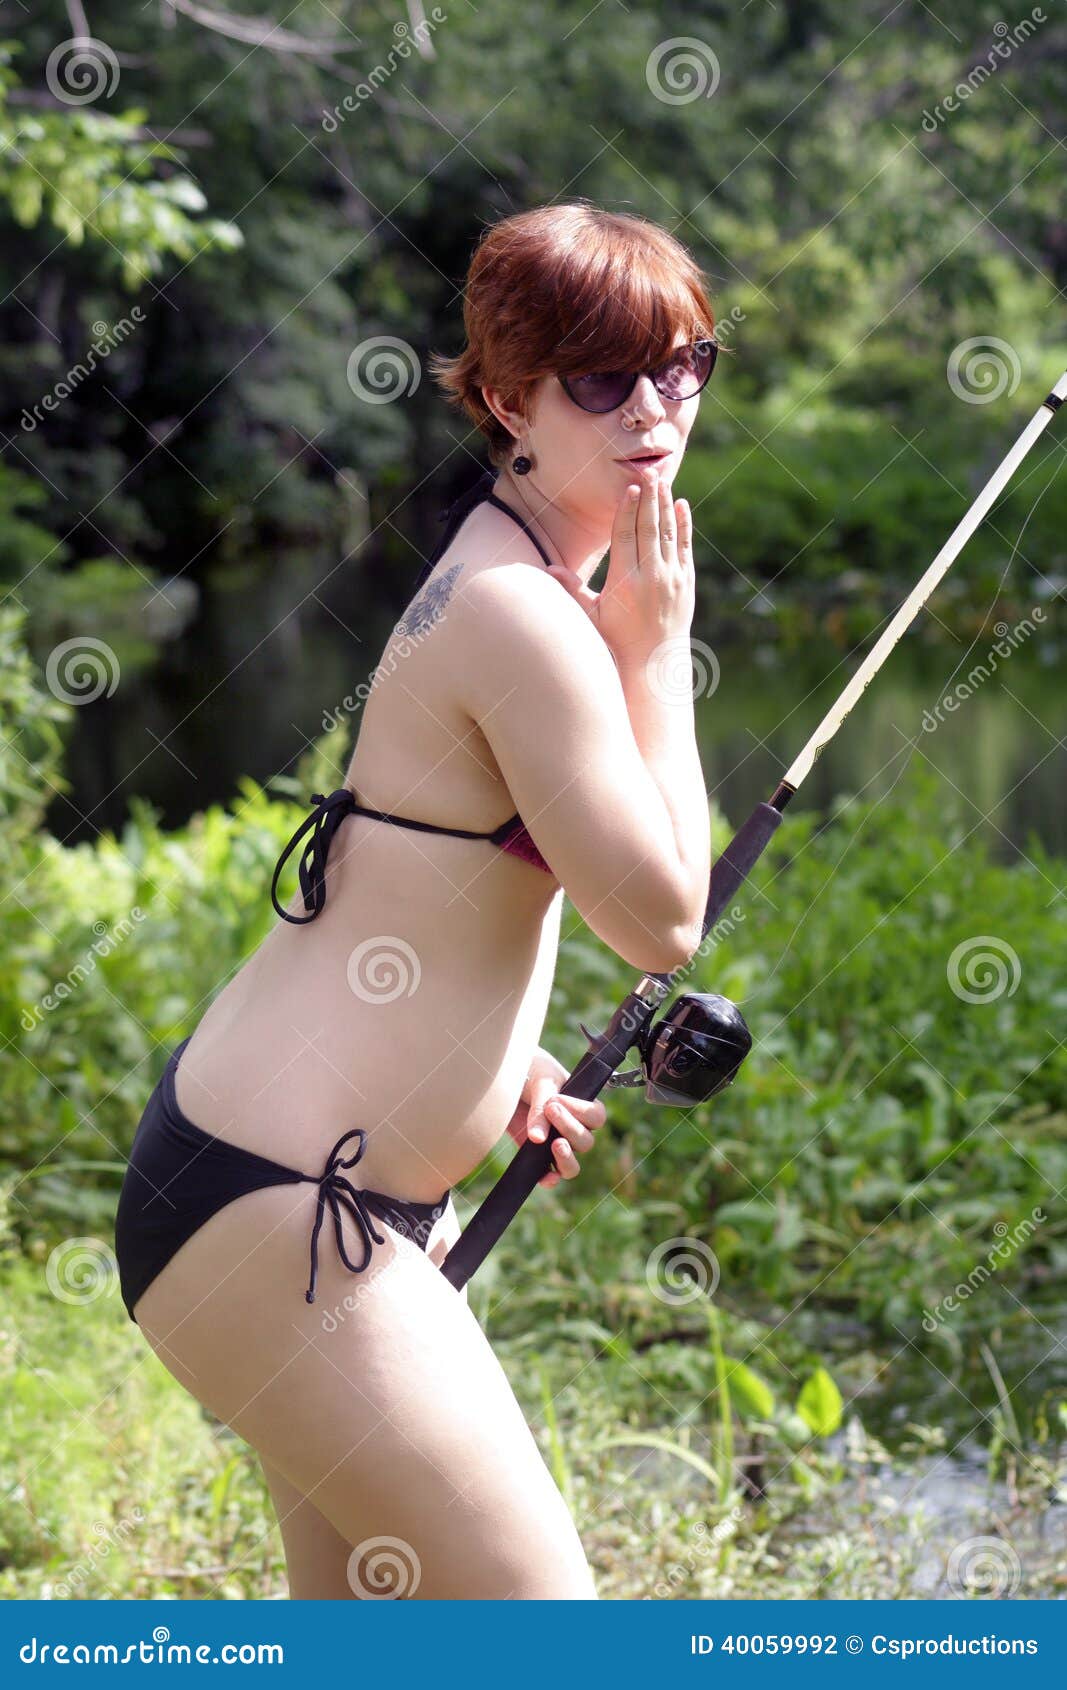 ventilation Pelmel not to mention Bikini-Clad Girl Fishing (3) Stock Photo - Image of human, jewelry: 40059992